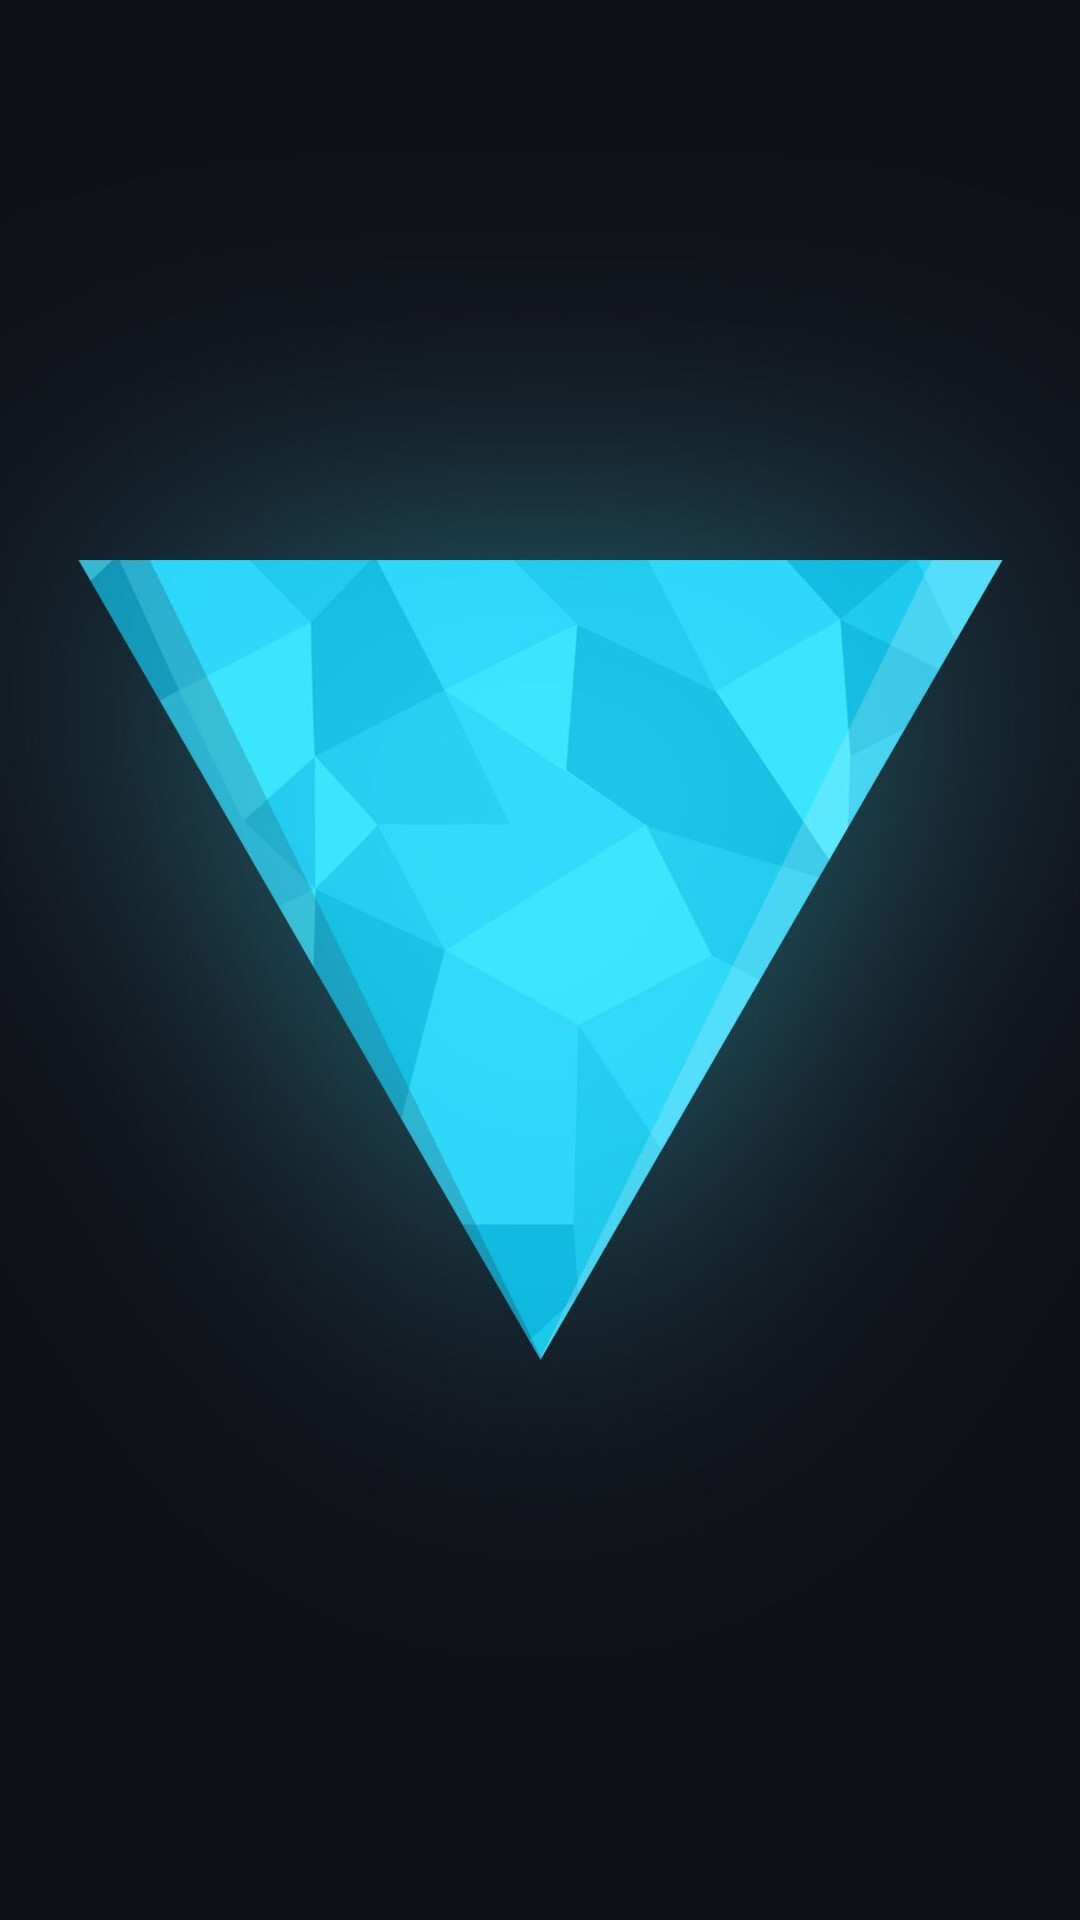 Geometric Abstract: Sky blue triangular, Vertex, Acute angles. 1080x1920 Full HD Background.